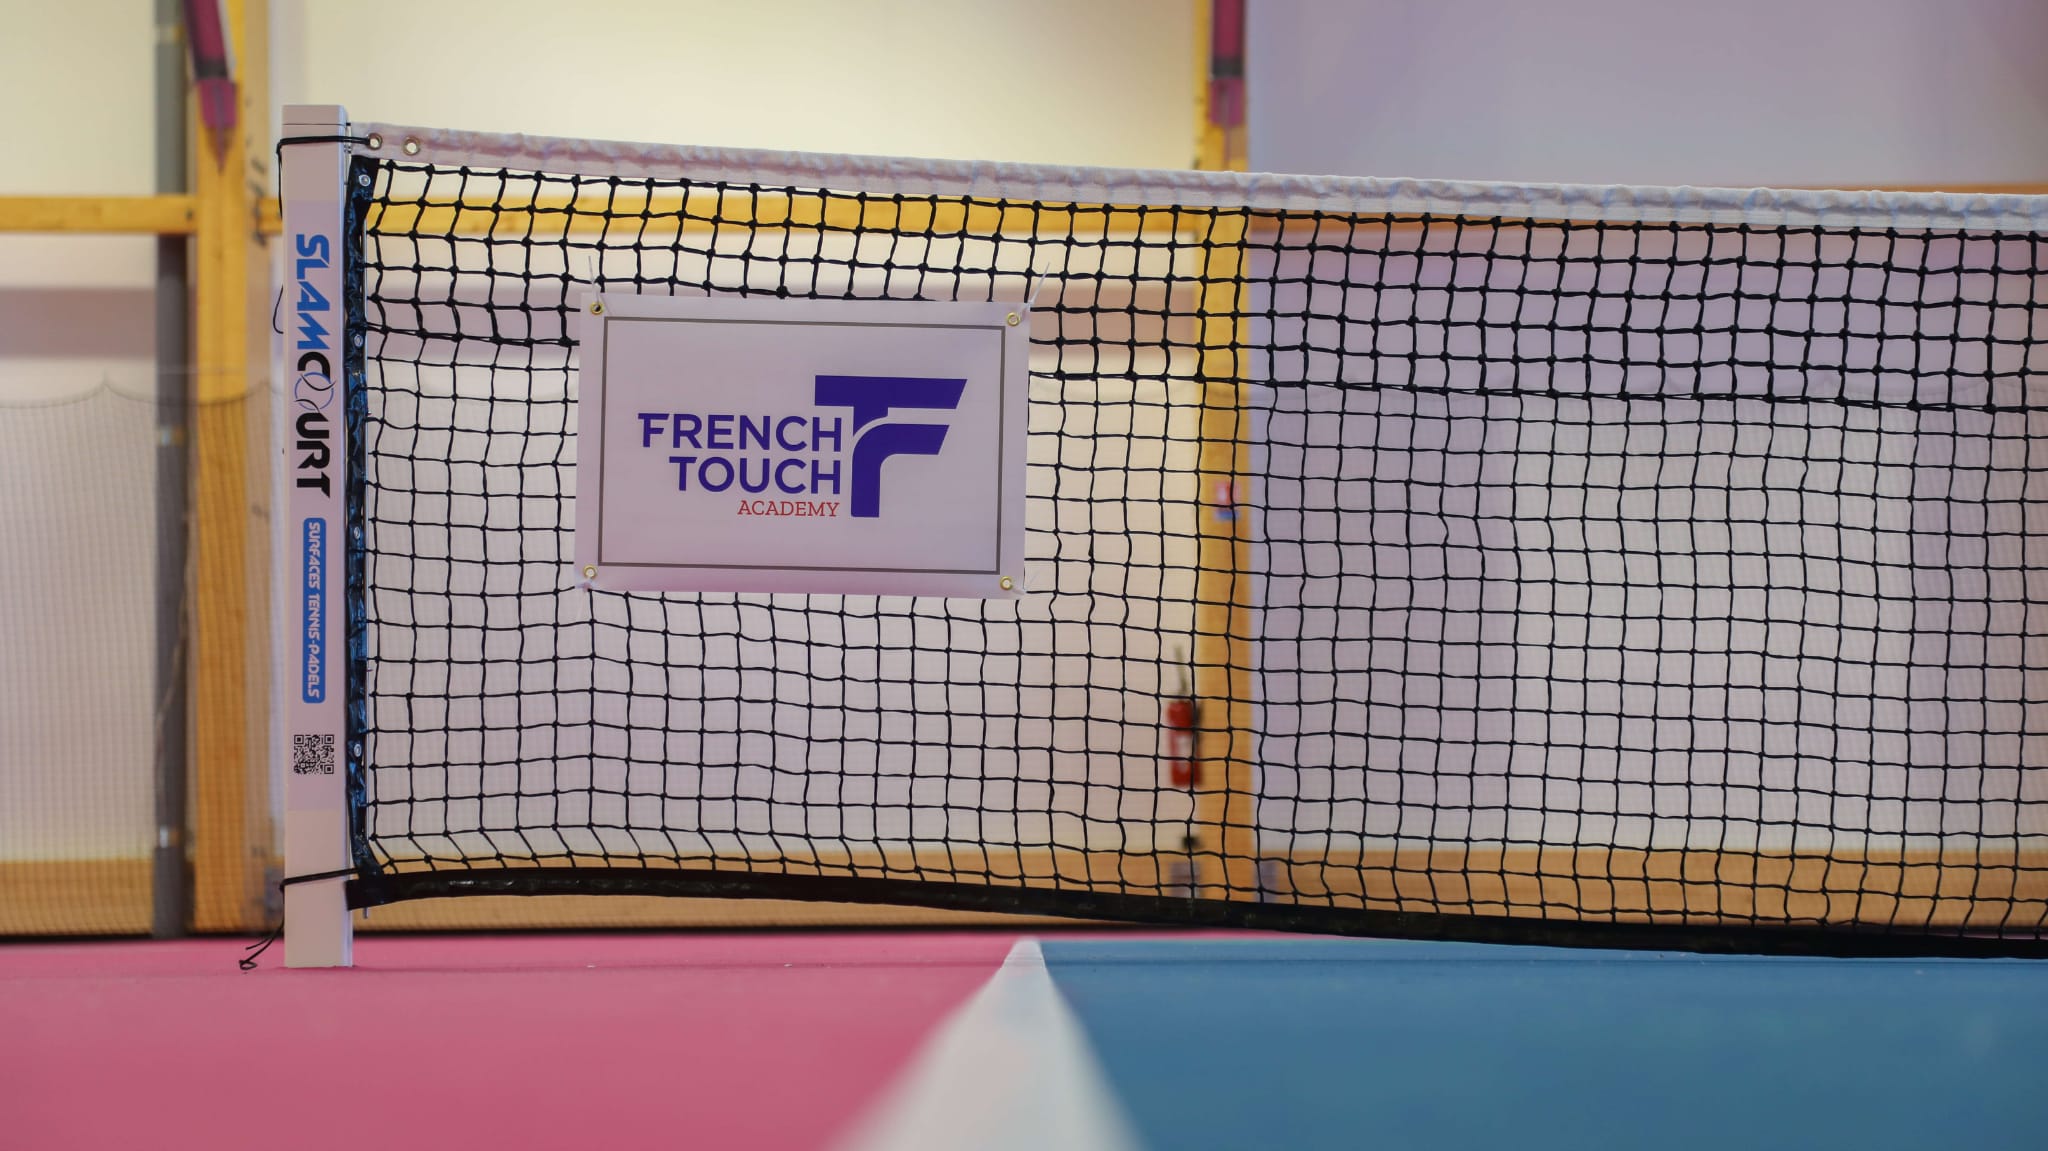 Filet de tennis avec logo French Touch academy